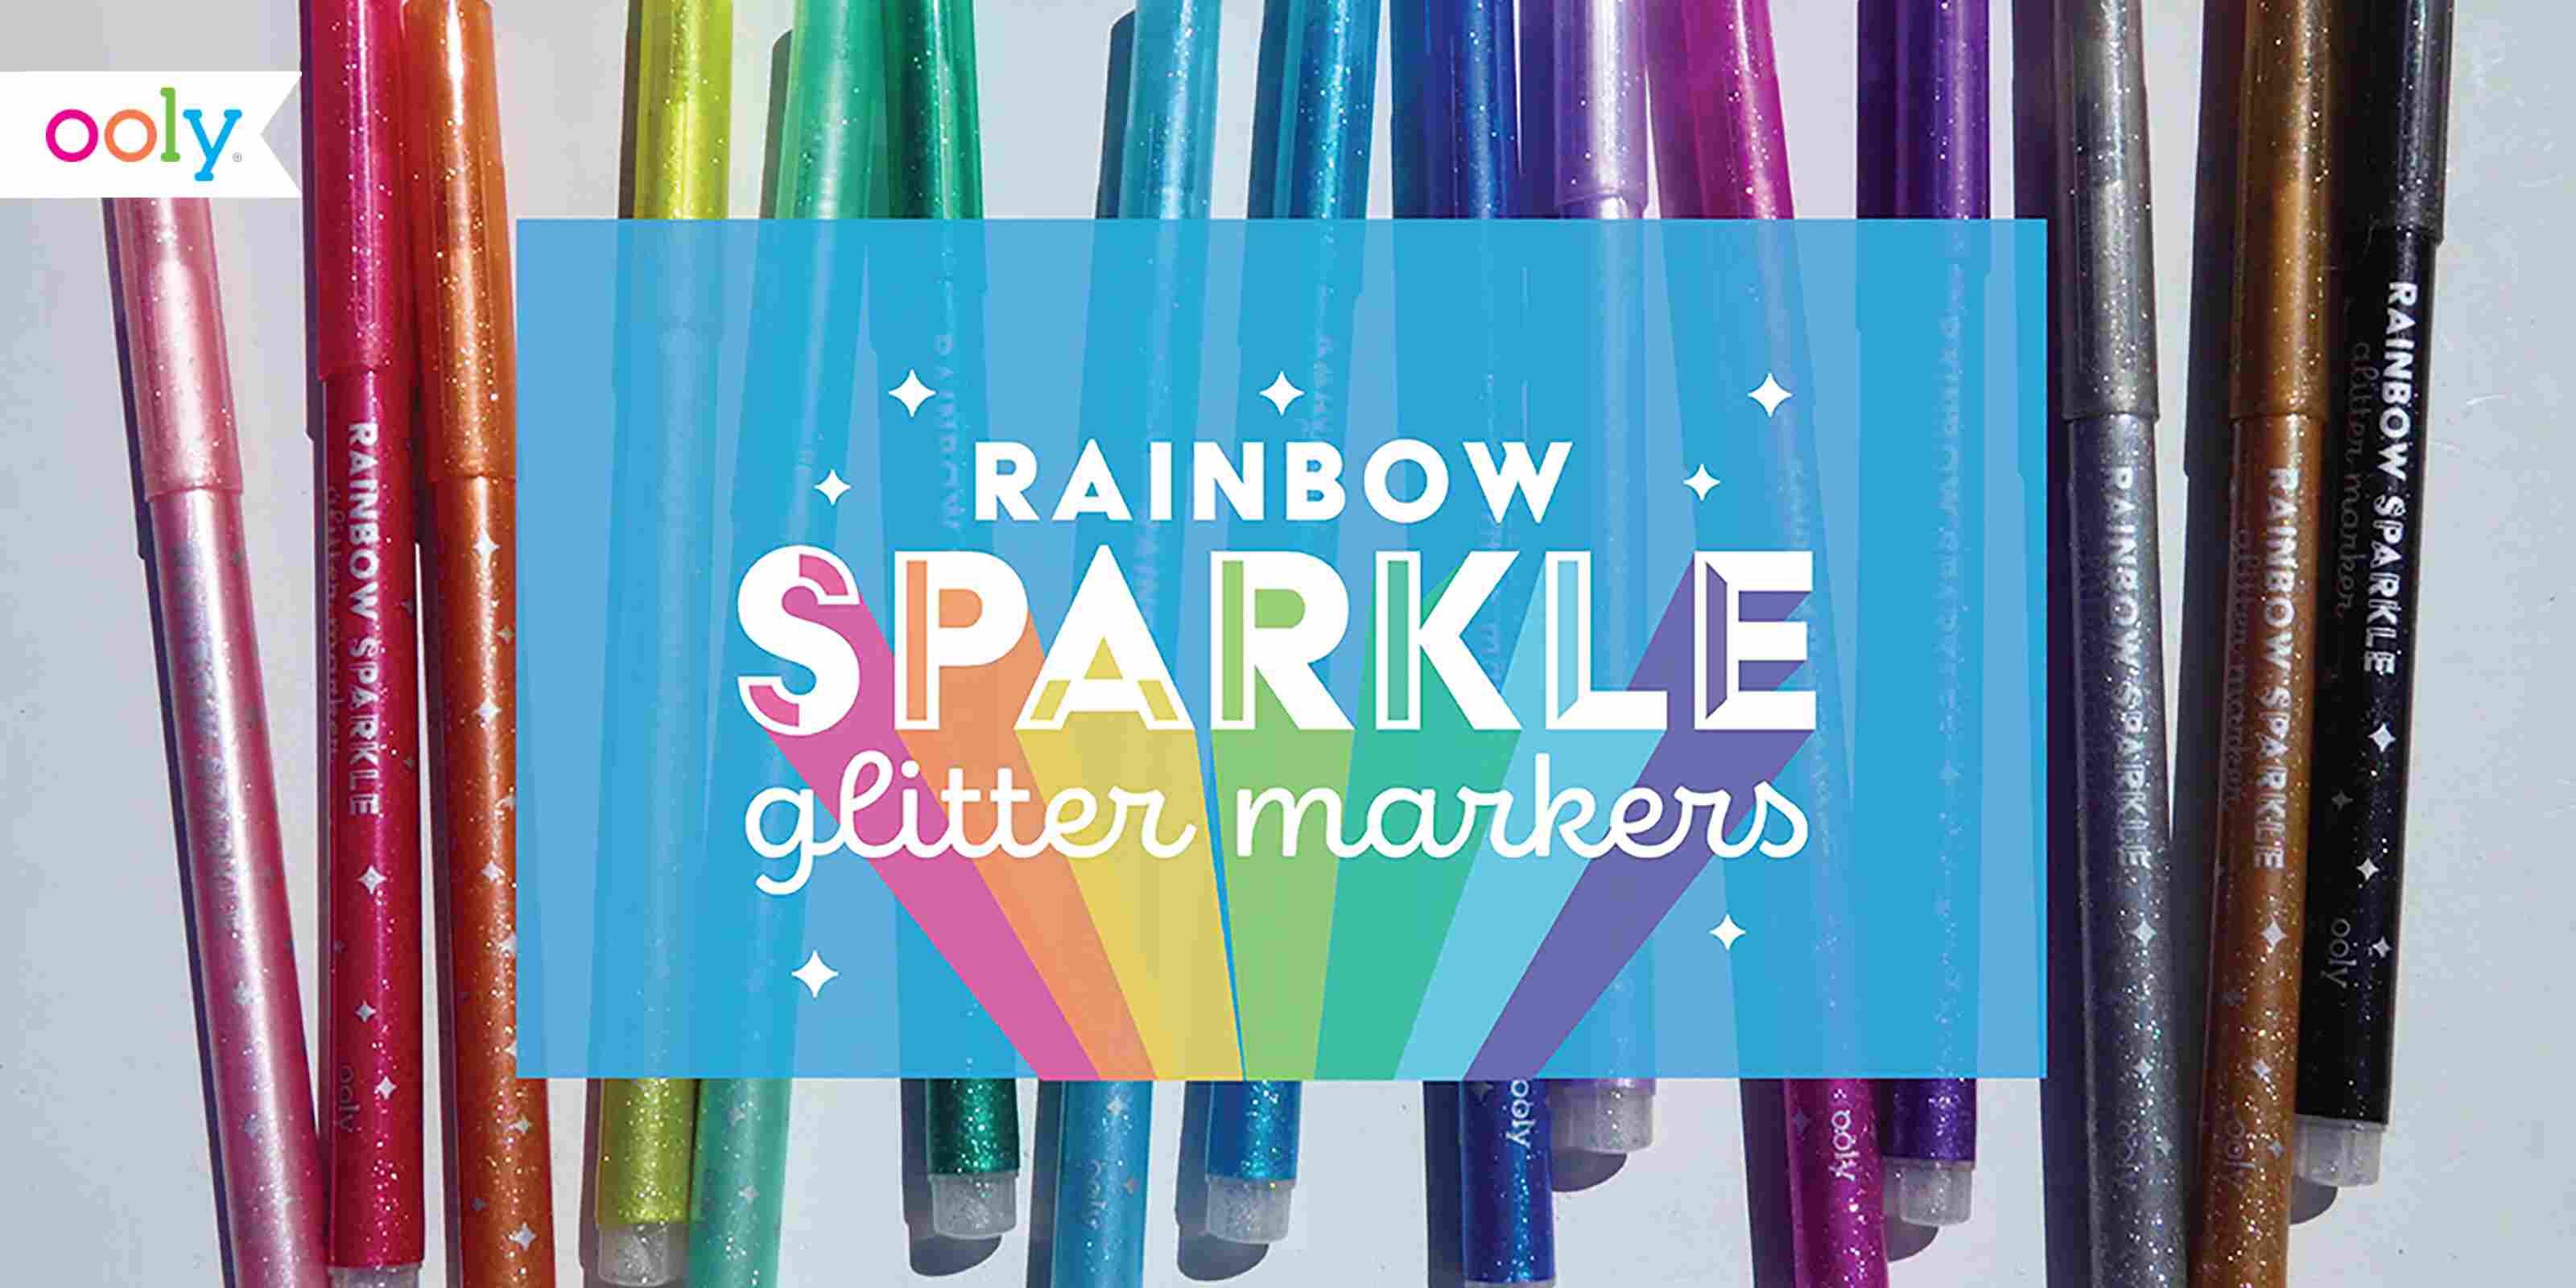 Go Create Rainbow Glitter Packs, 16 Assorted Glitter Colors 